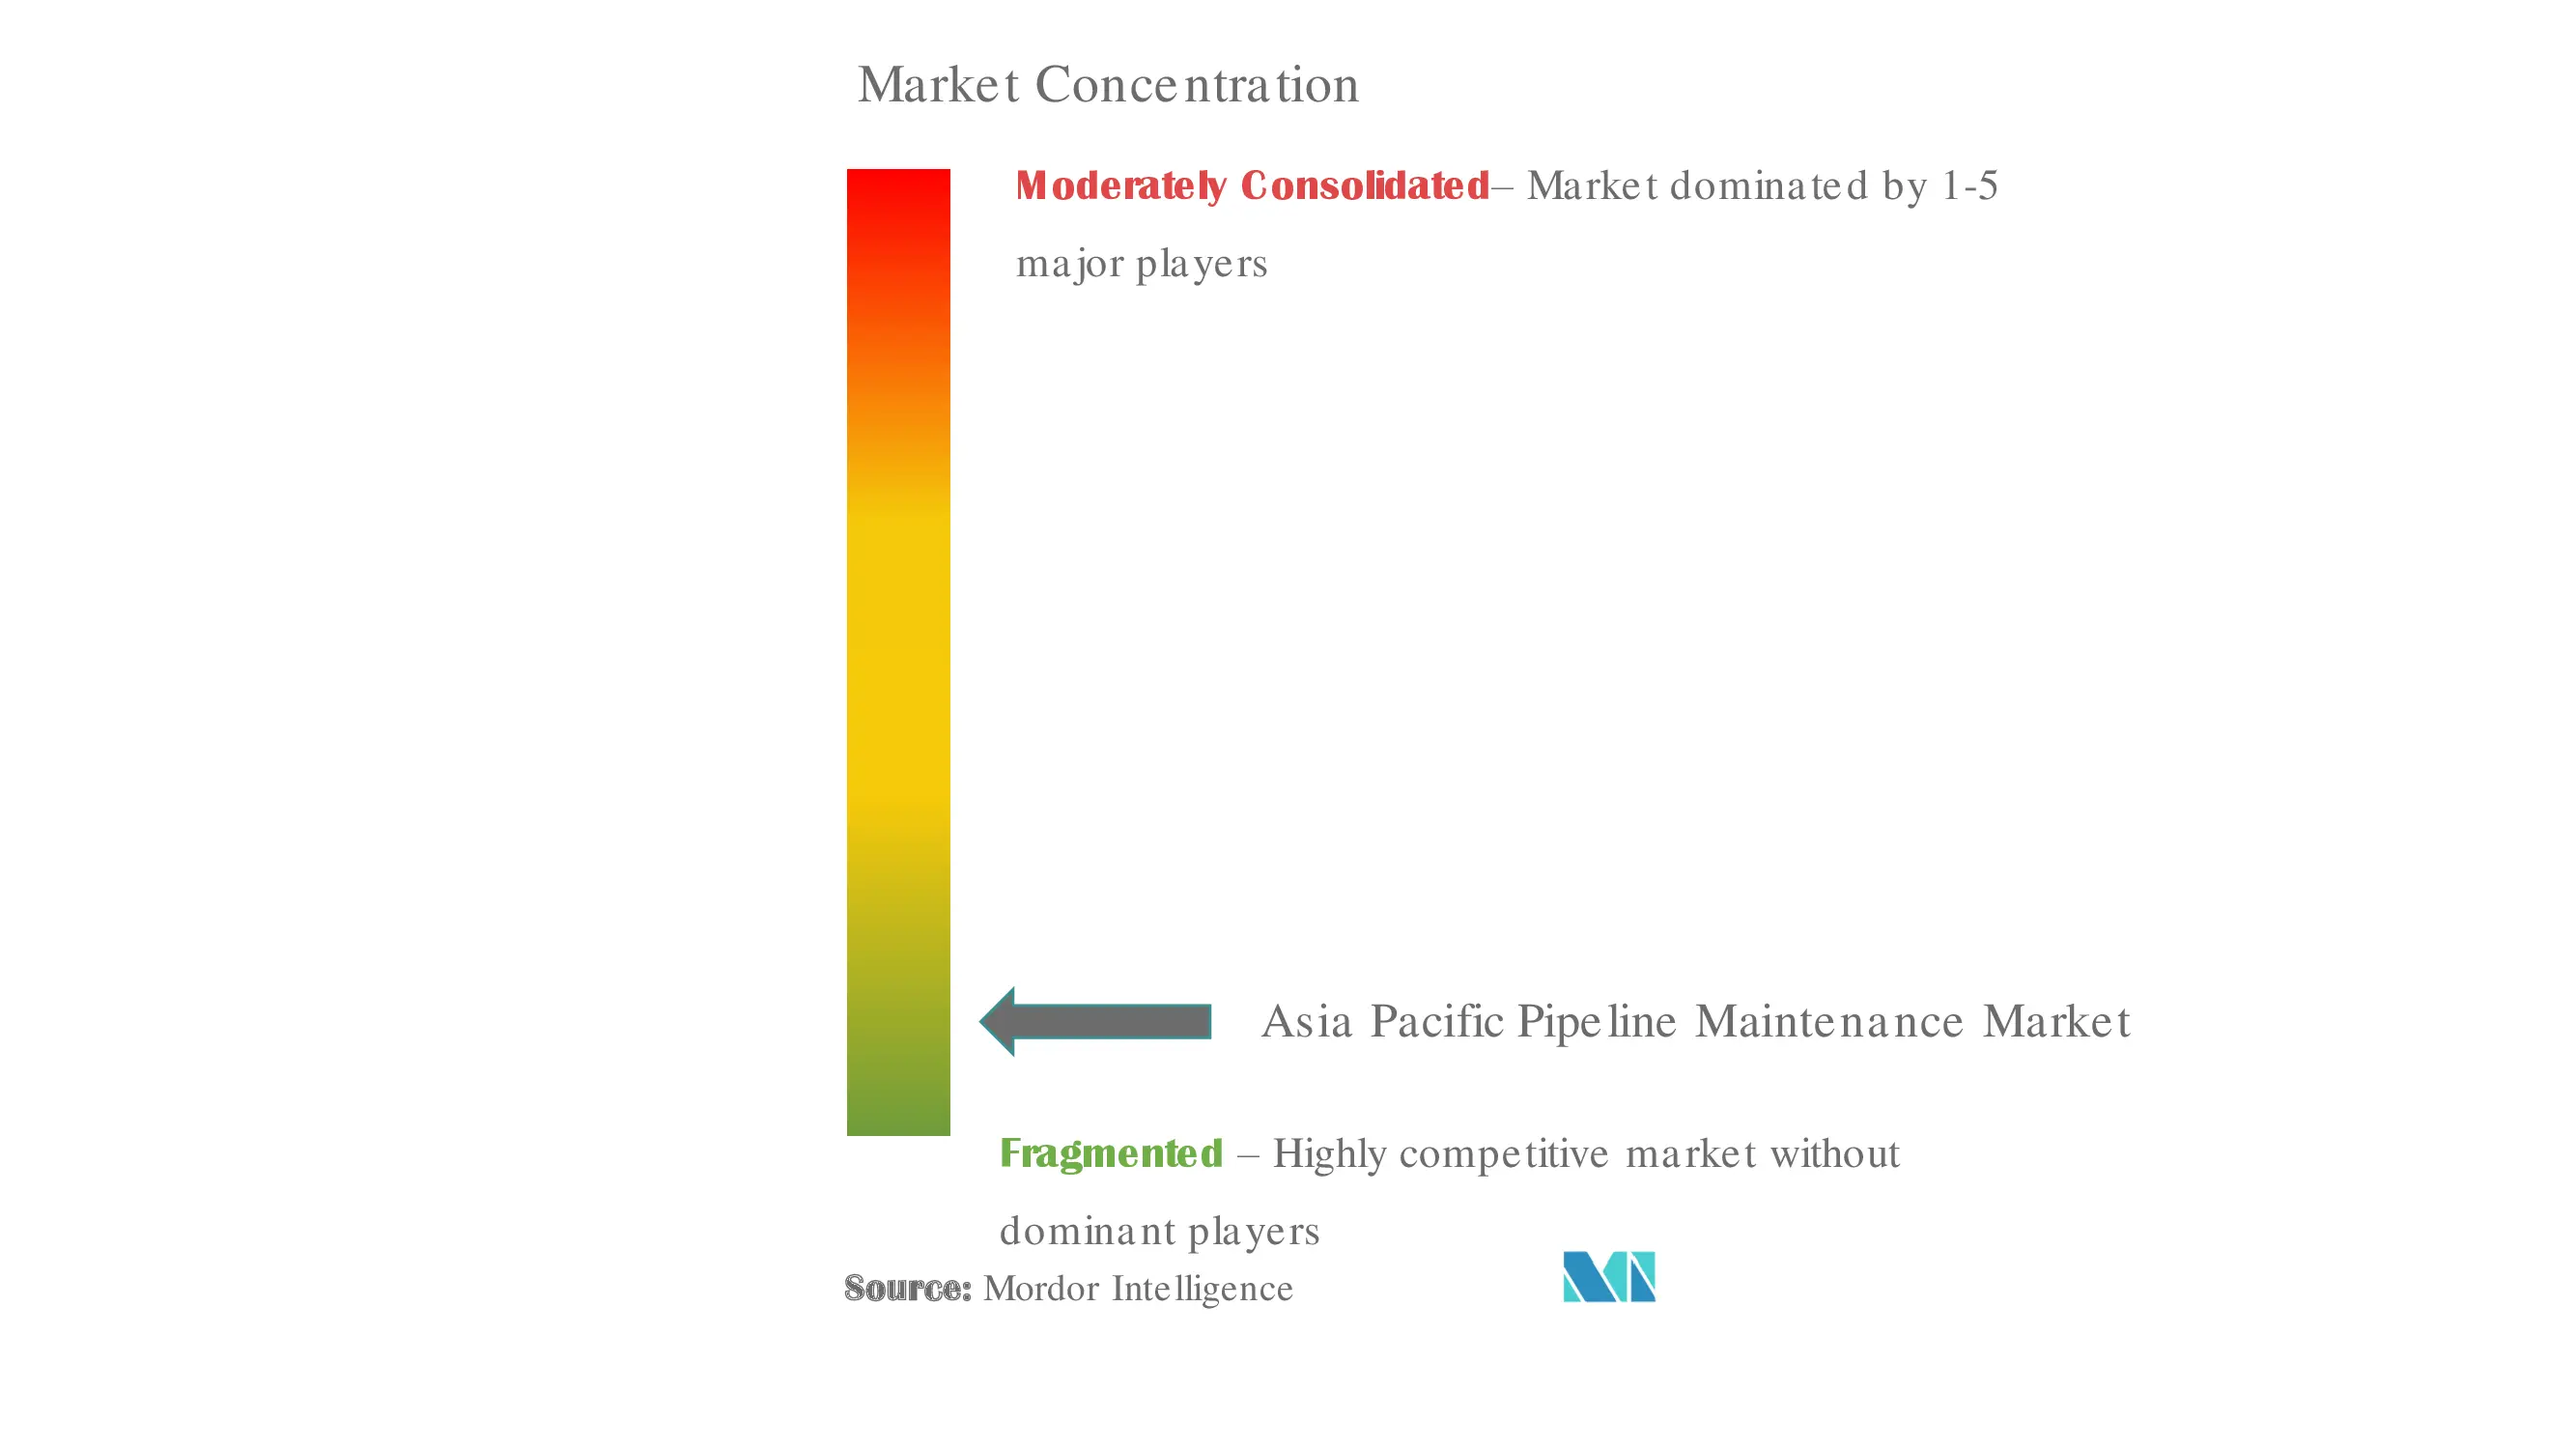 Asia Pacific Pipeline Maintenance Market Concentration